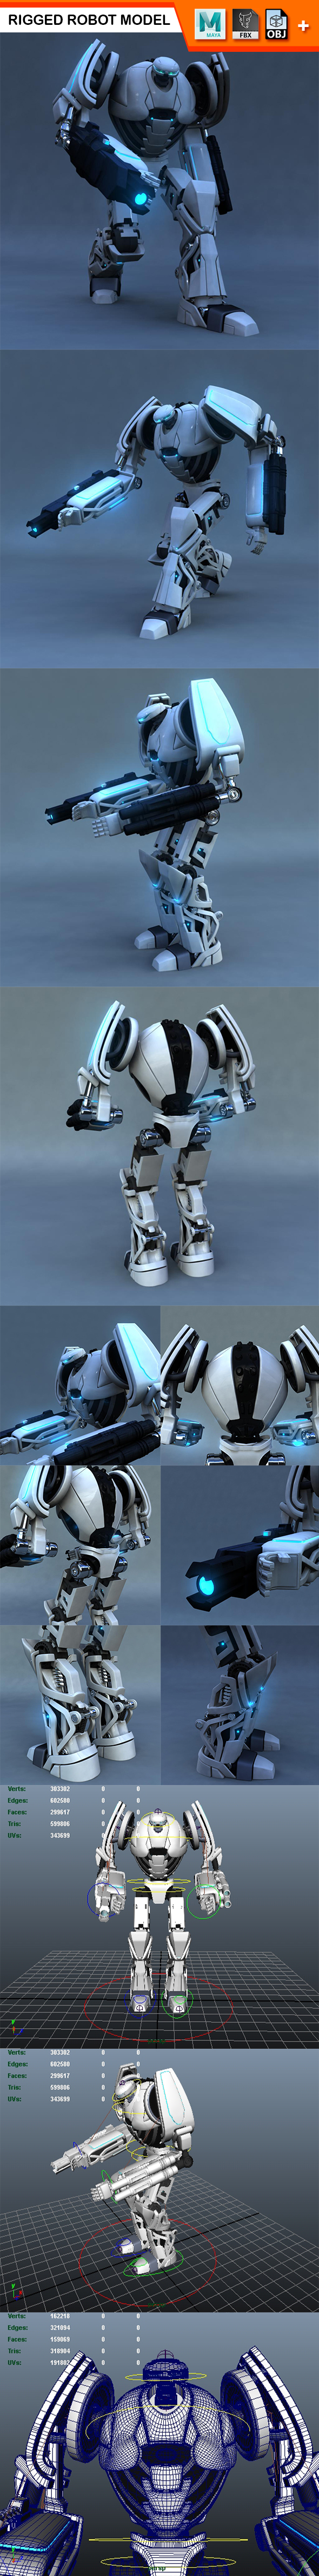 Rigged Robot Model - 3Docean 28409822